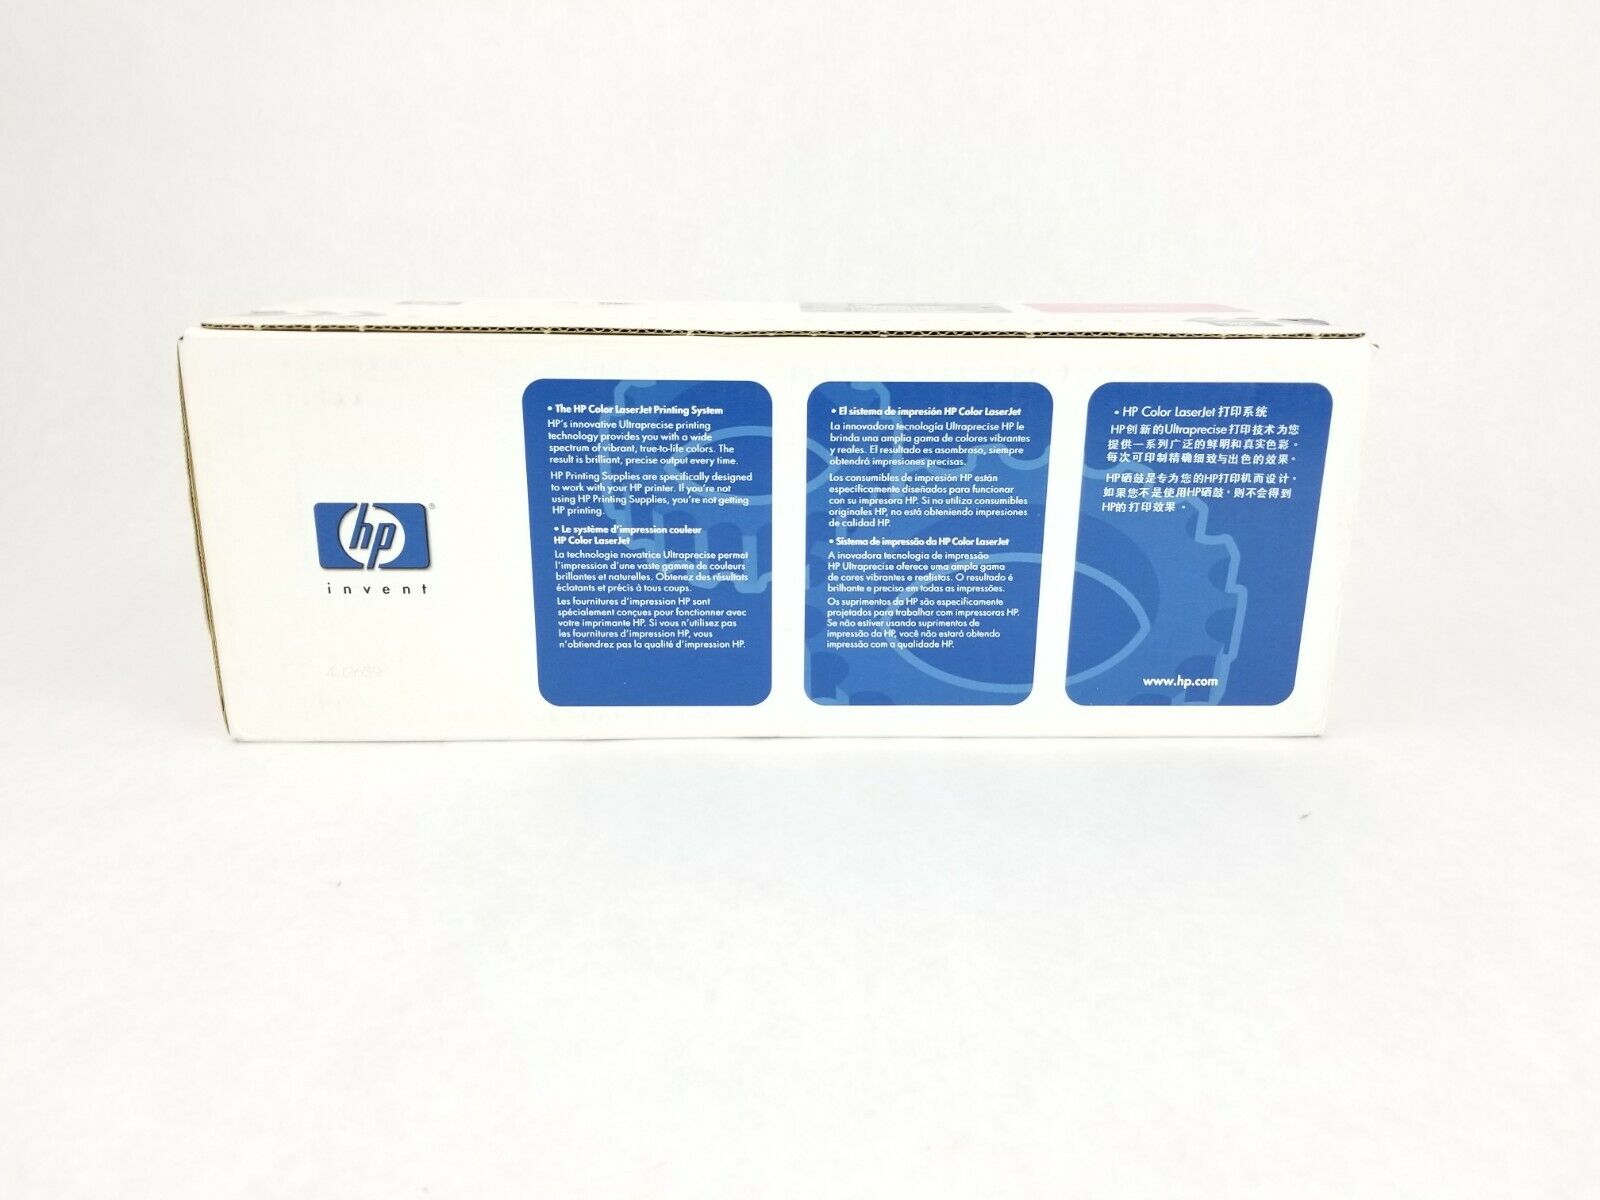 Genuine HP Color LaserJet 4500 4550 Series C4193A Toner Cartridge Magenta